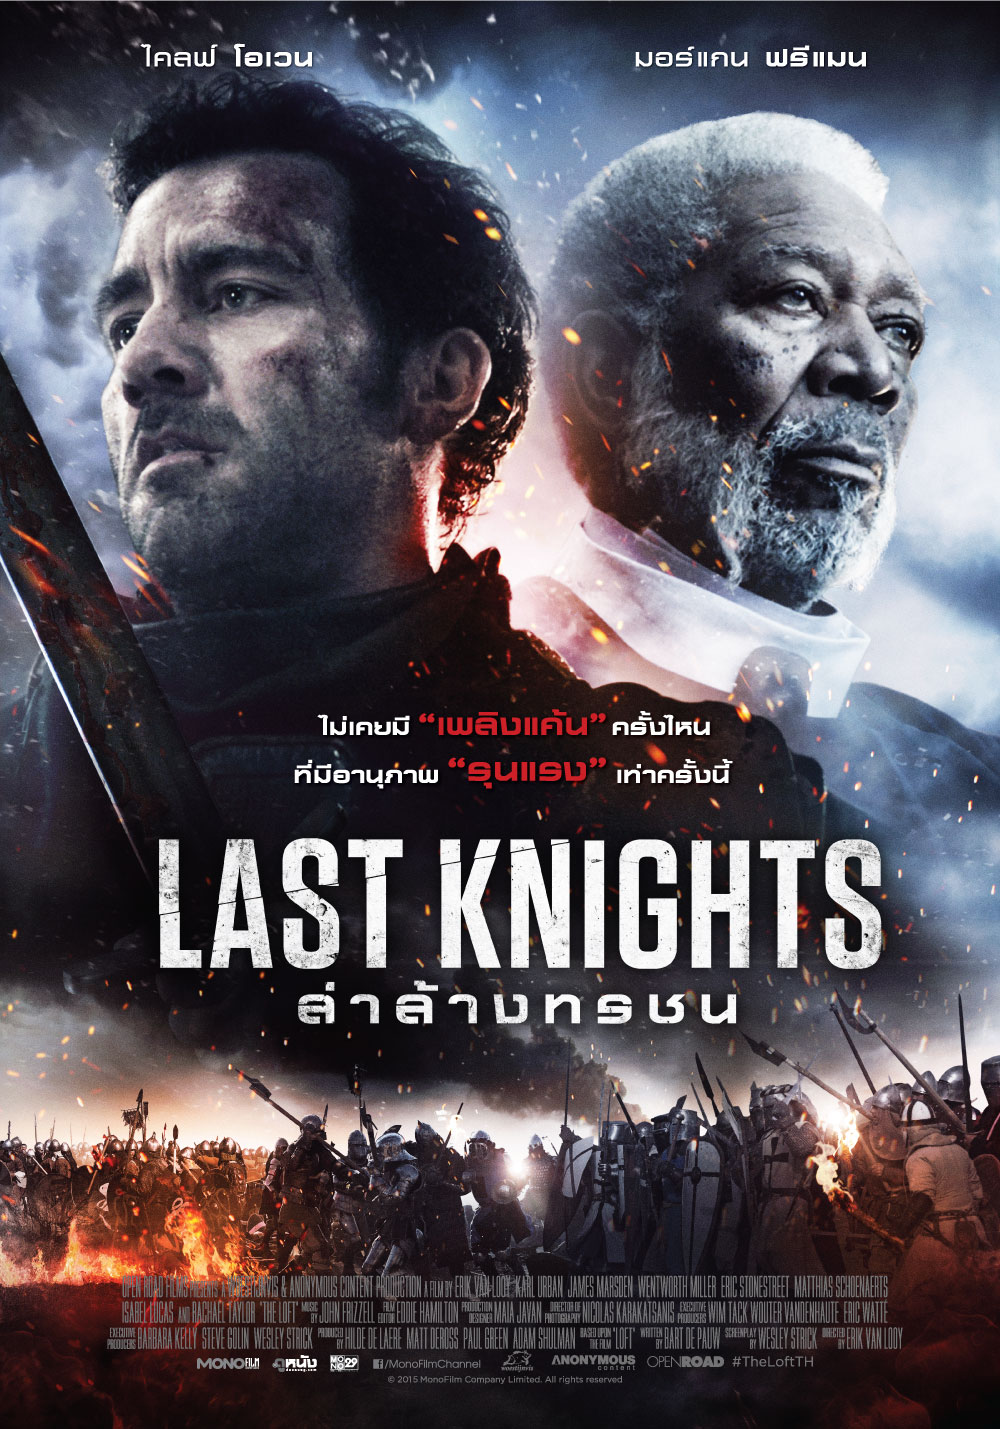 Last Knights (2015) ล่าล้างทรชน - ดูหนังออนไลน